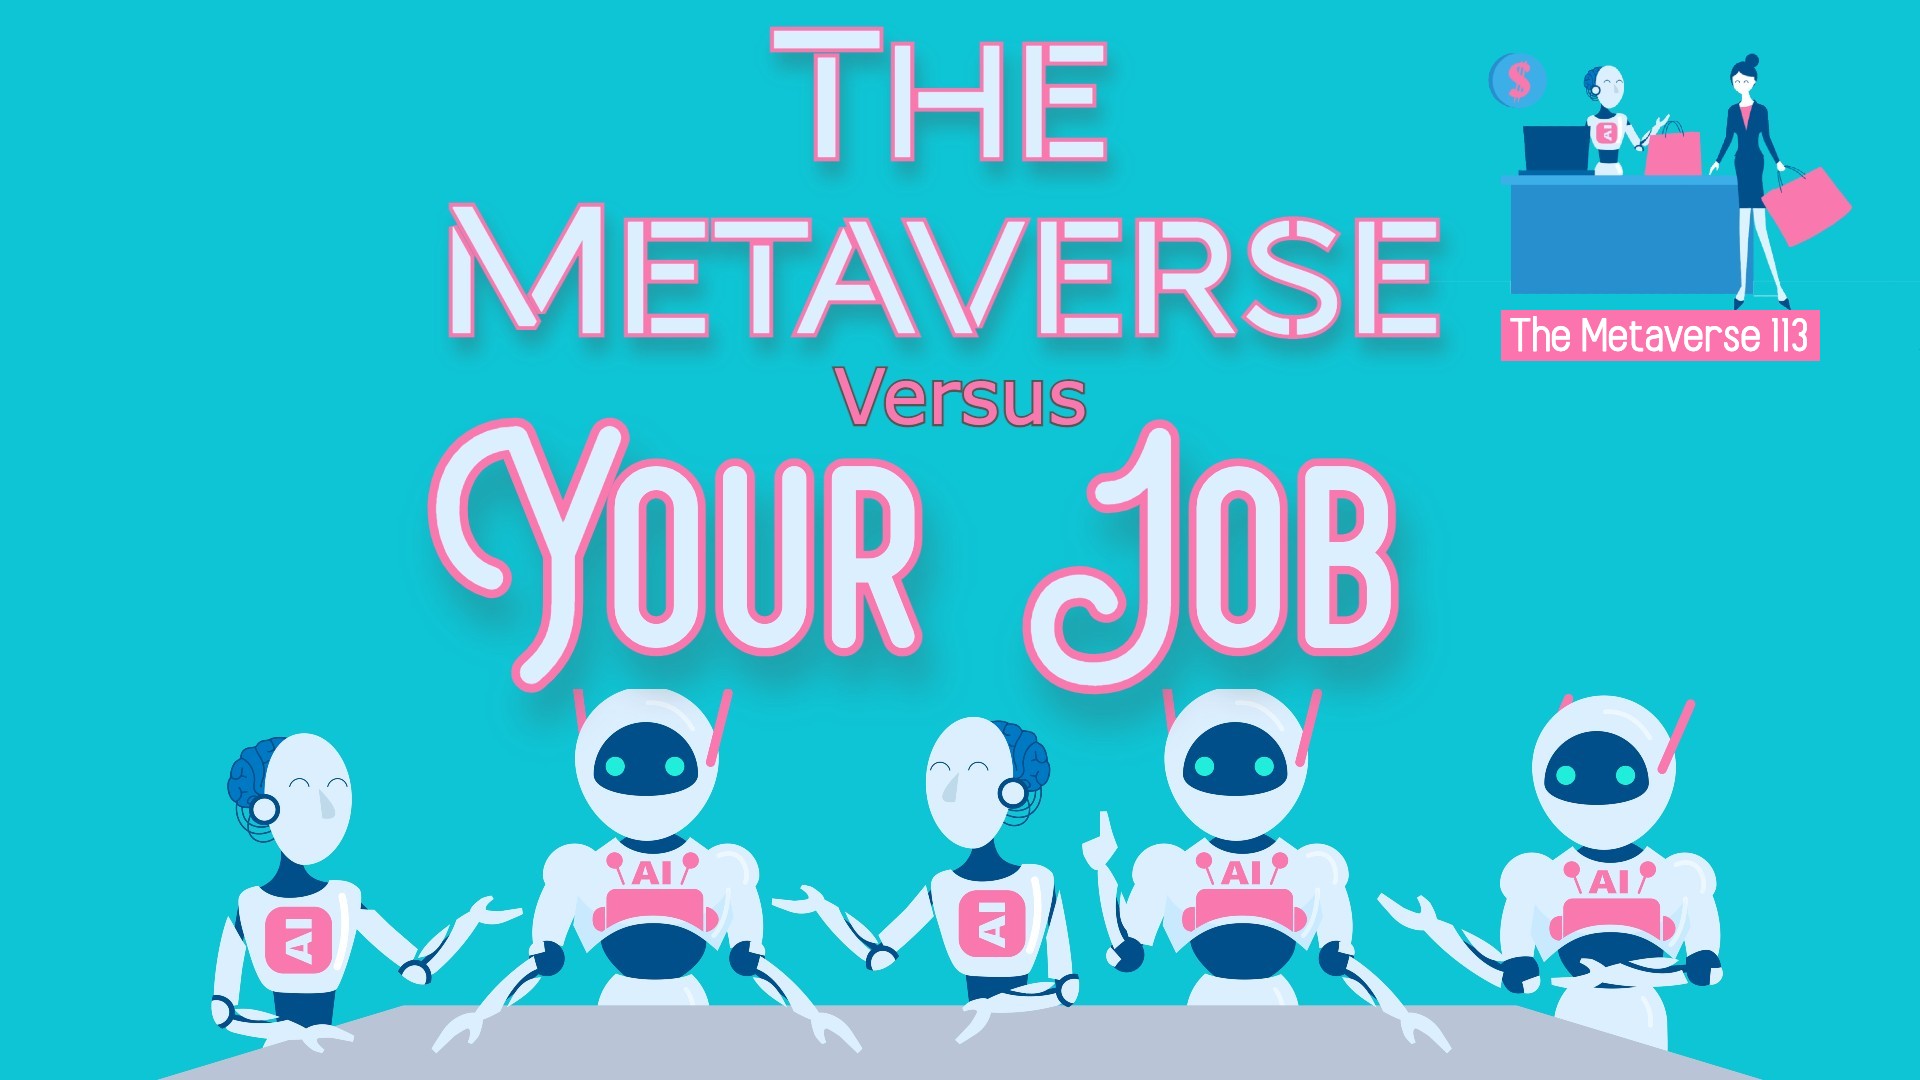 The Metaverse 113: The Metaverse vs. Your Job